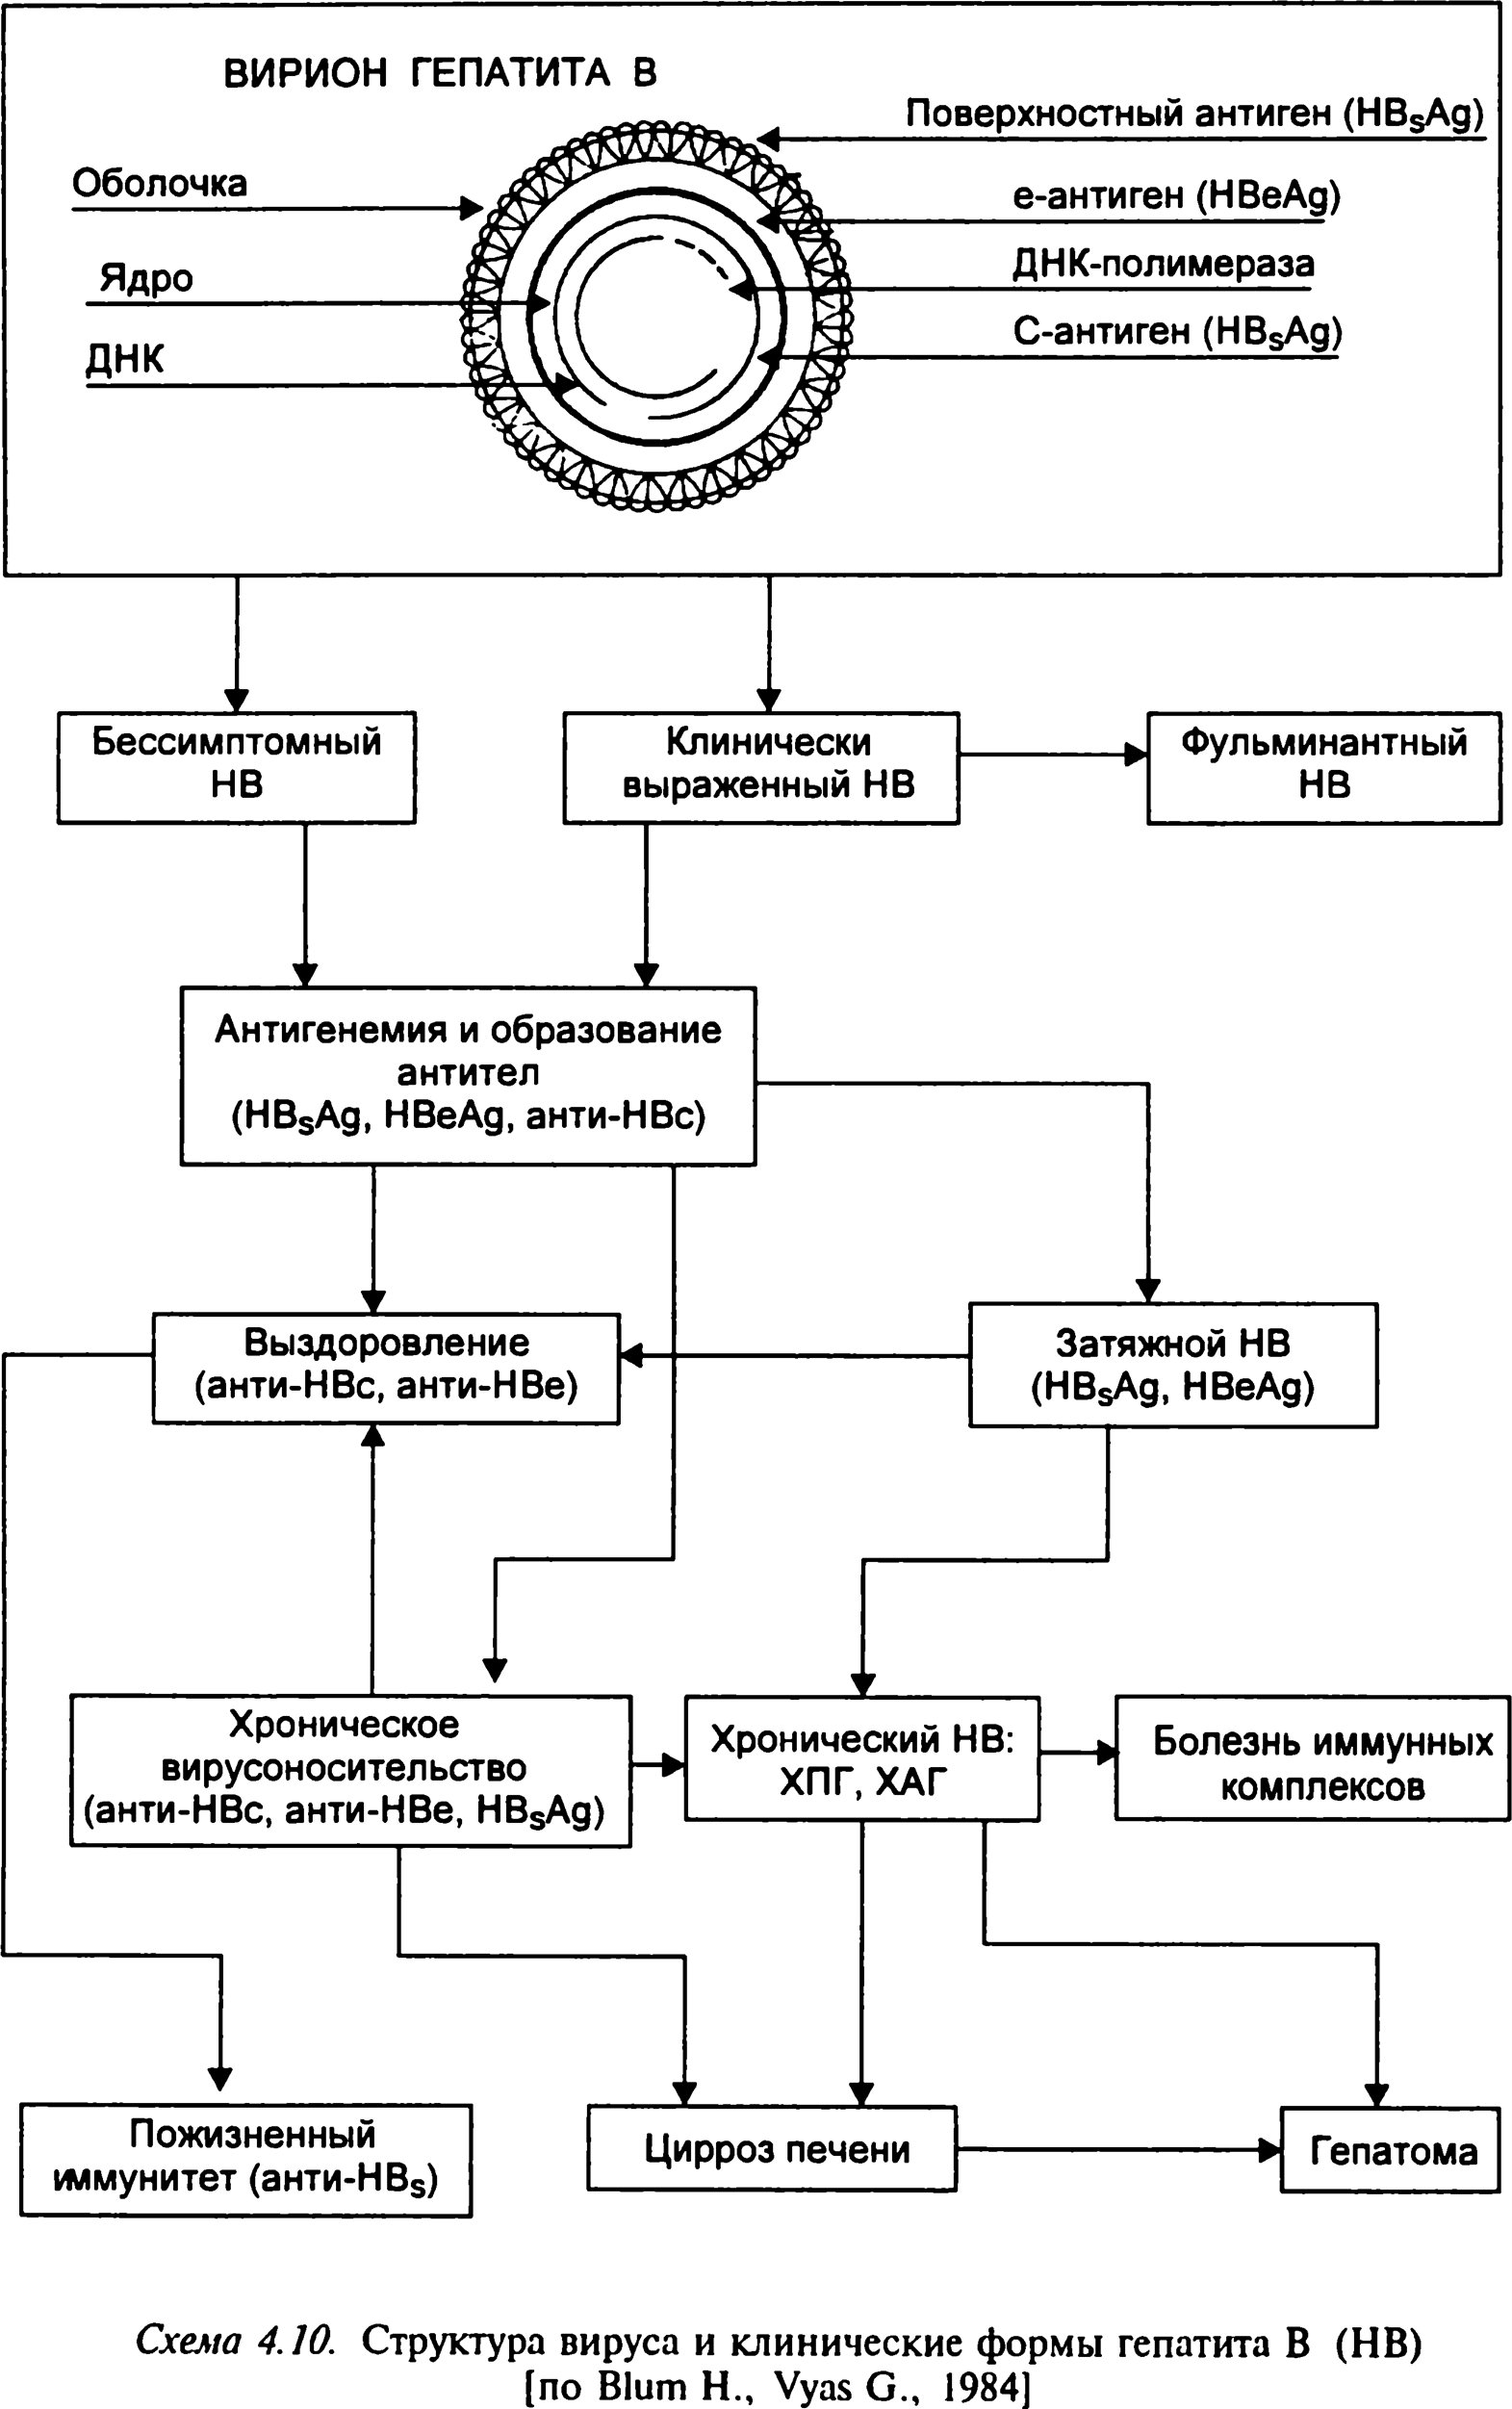 Структура вируса и клинические формы гепатита B (HB)